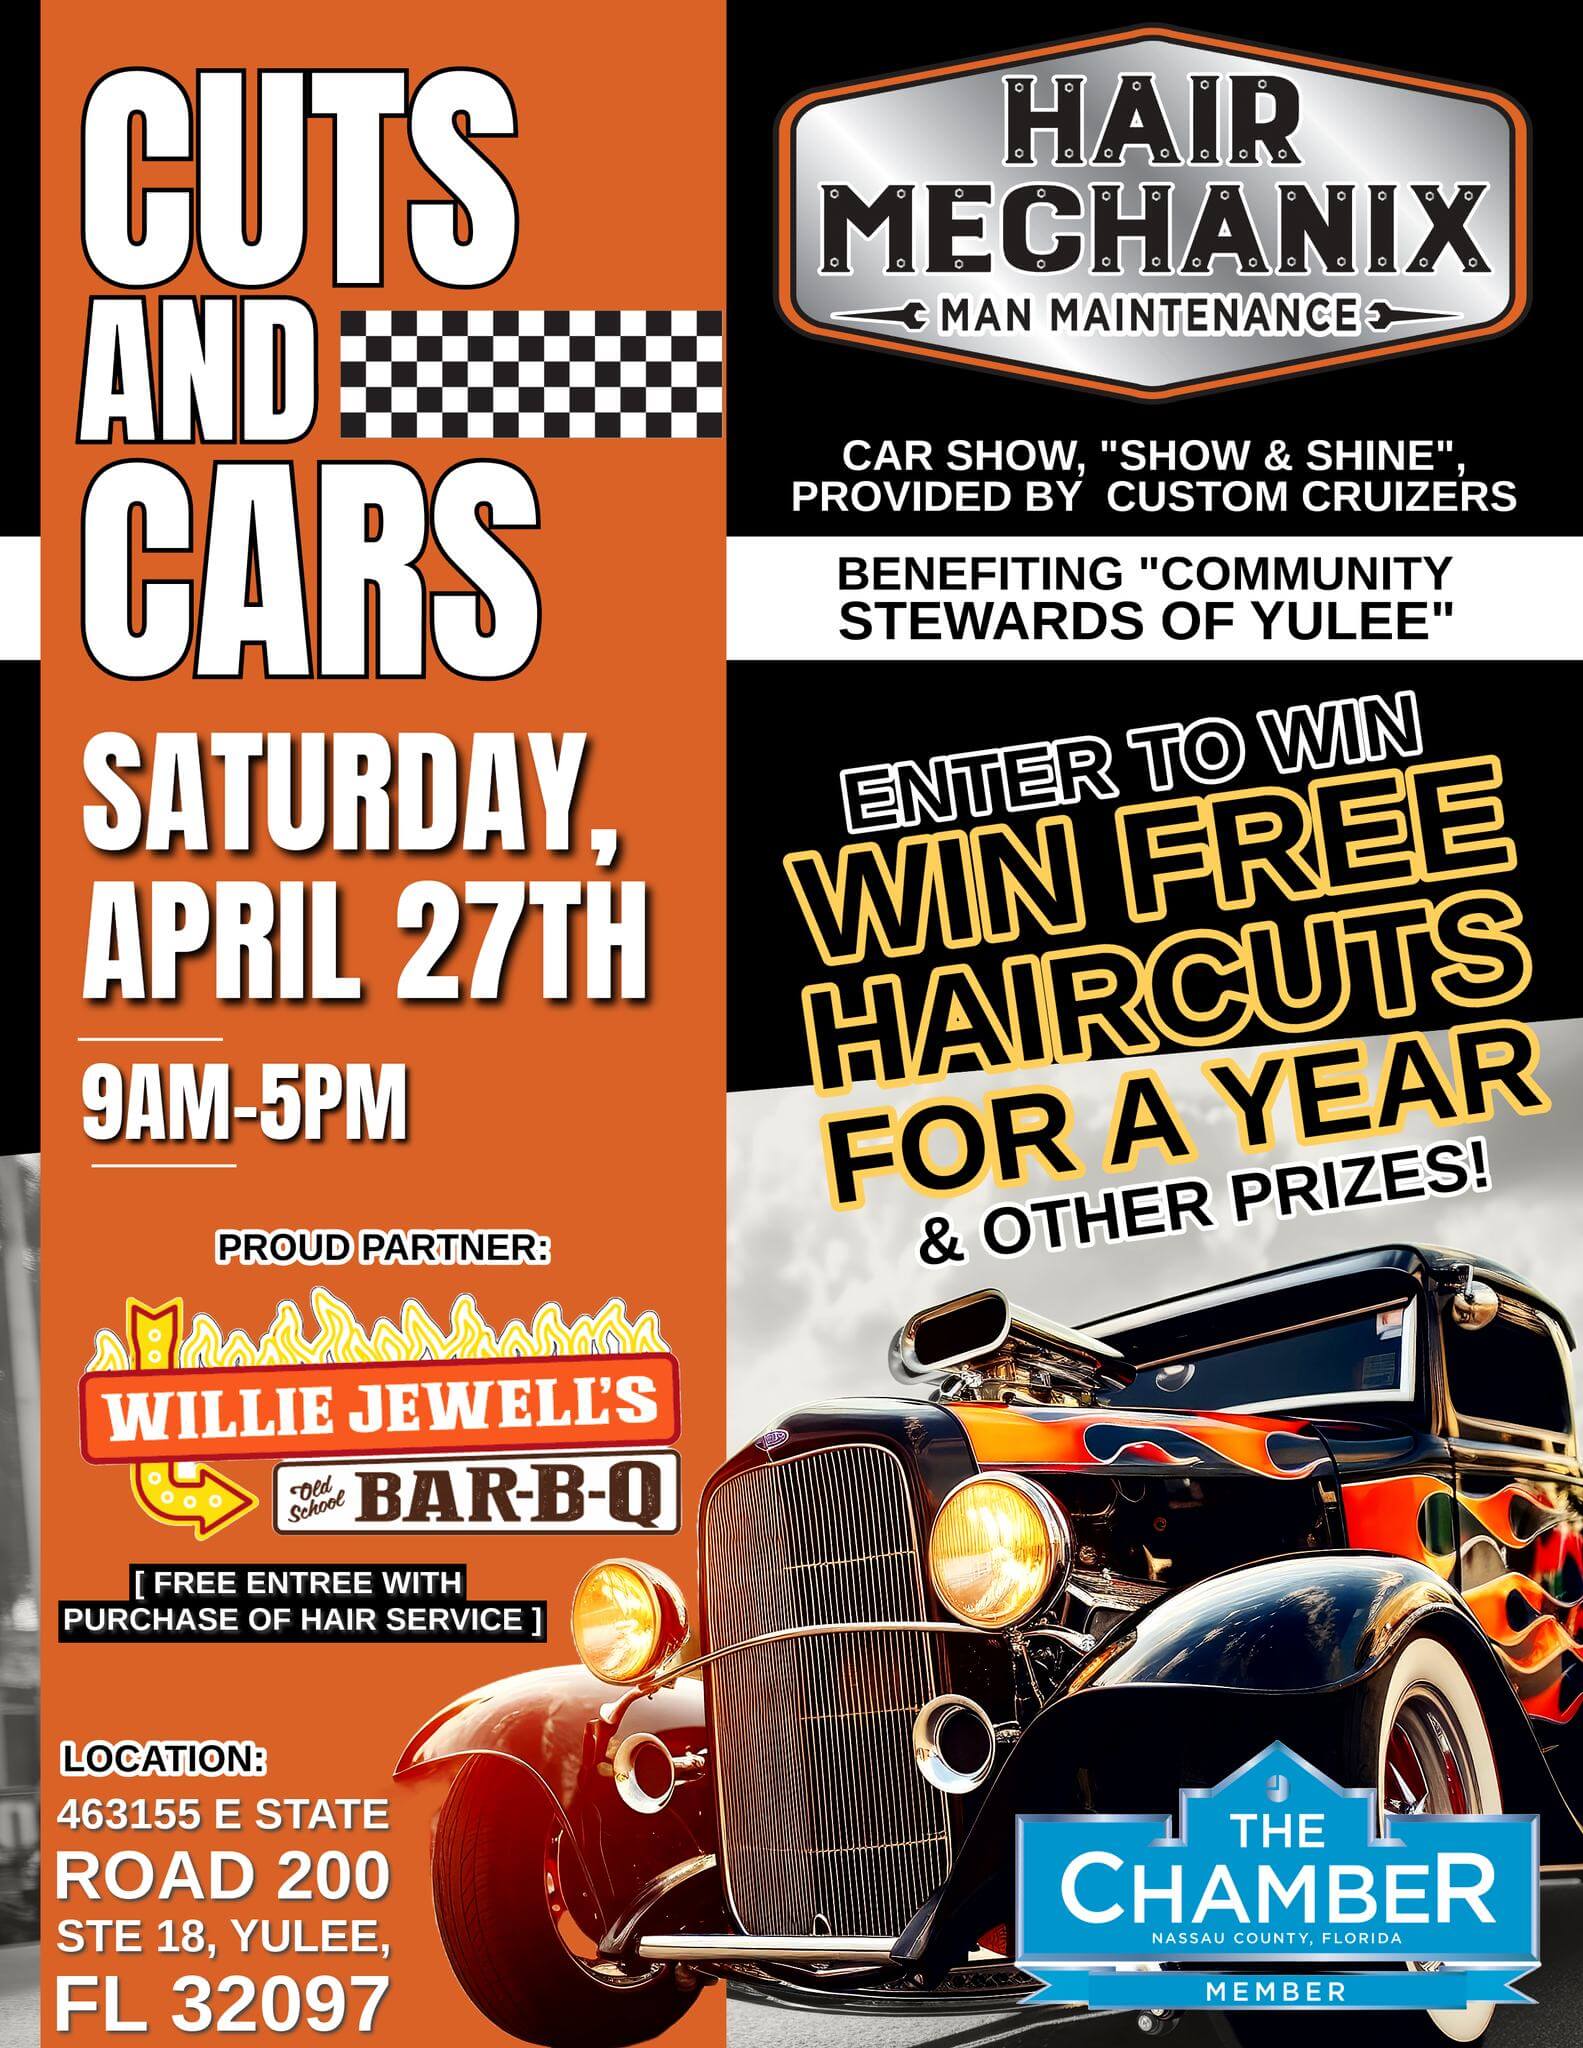 Hair Mechanix Cuts & Cars Grand Opening Event